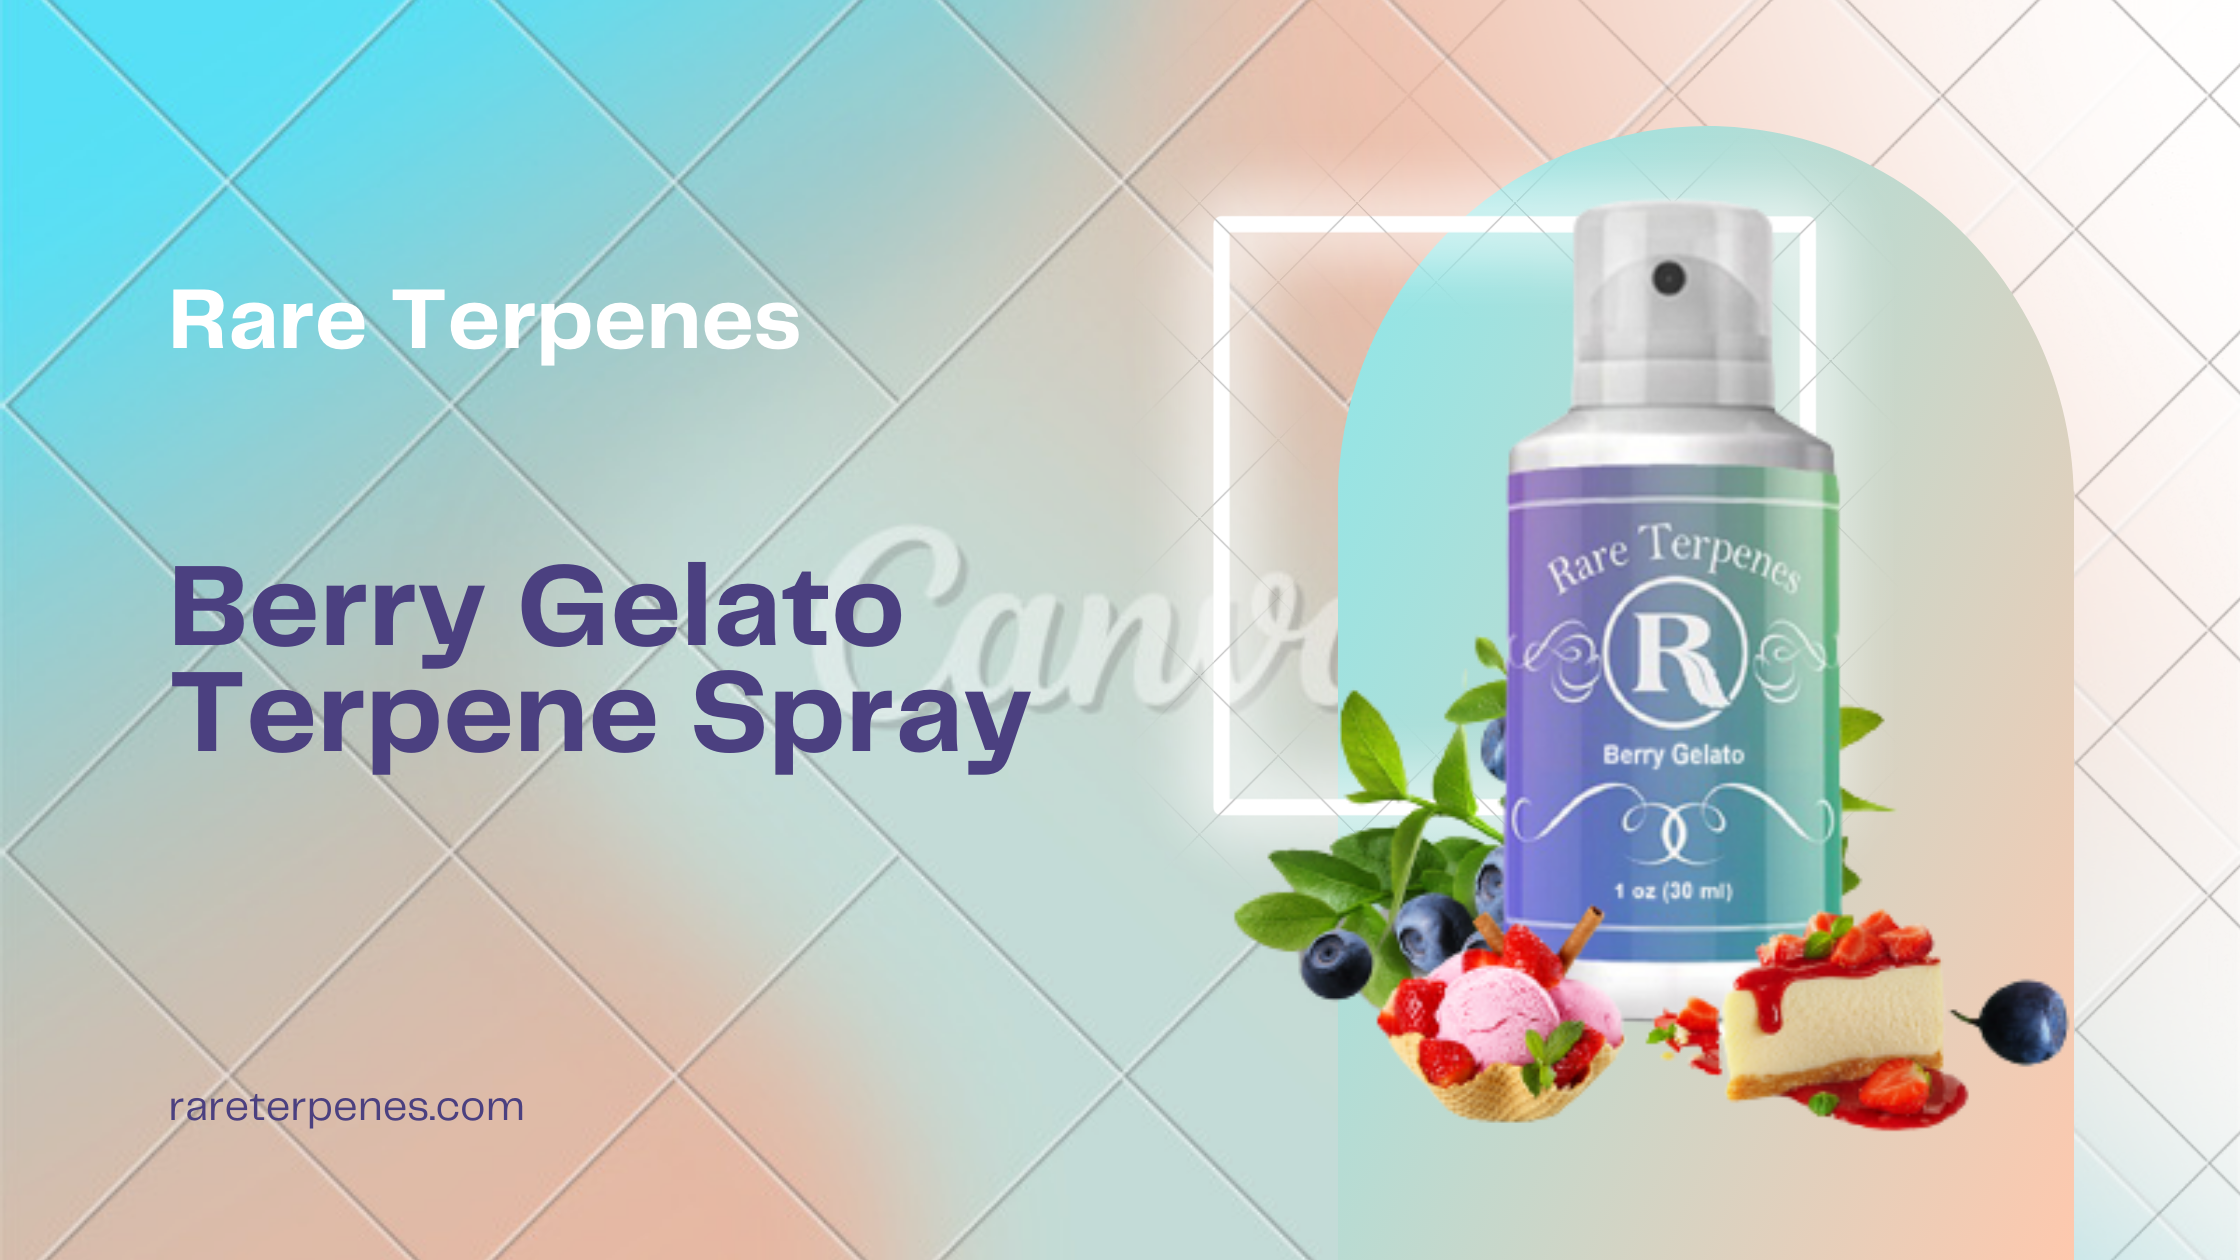 Berry Gelato Terpene Spray